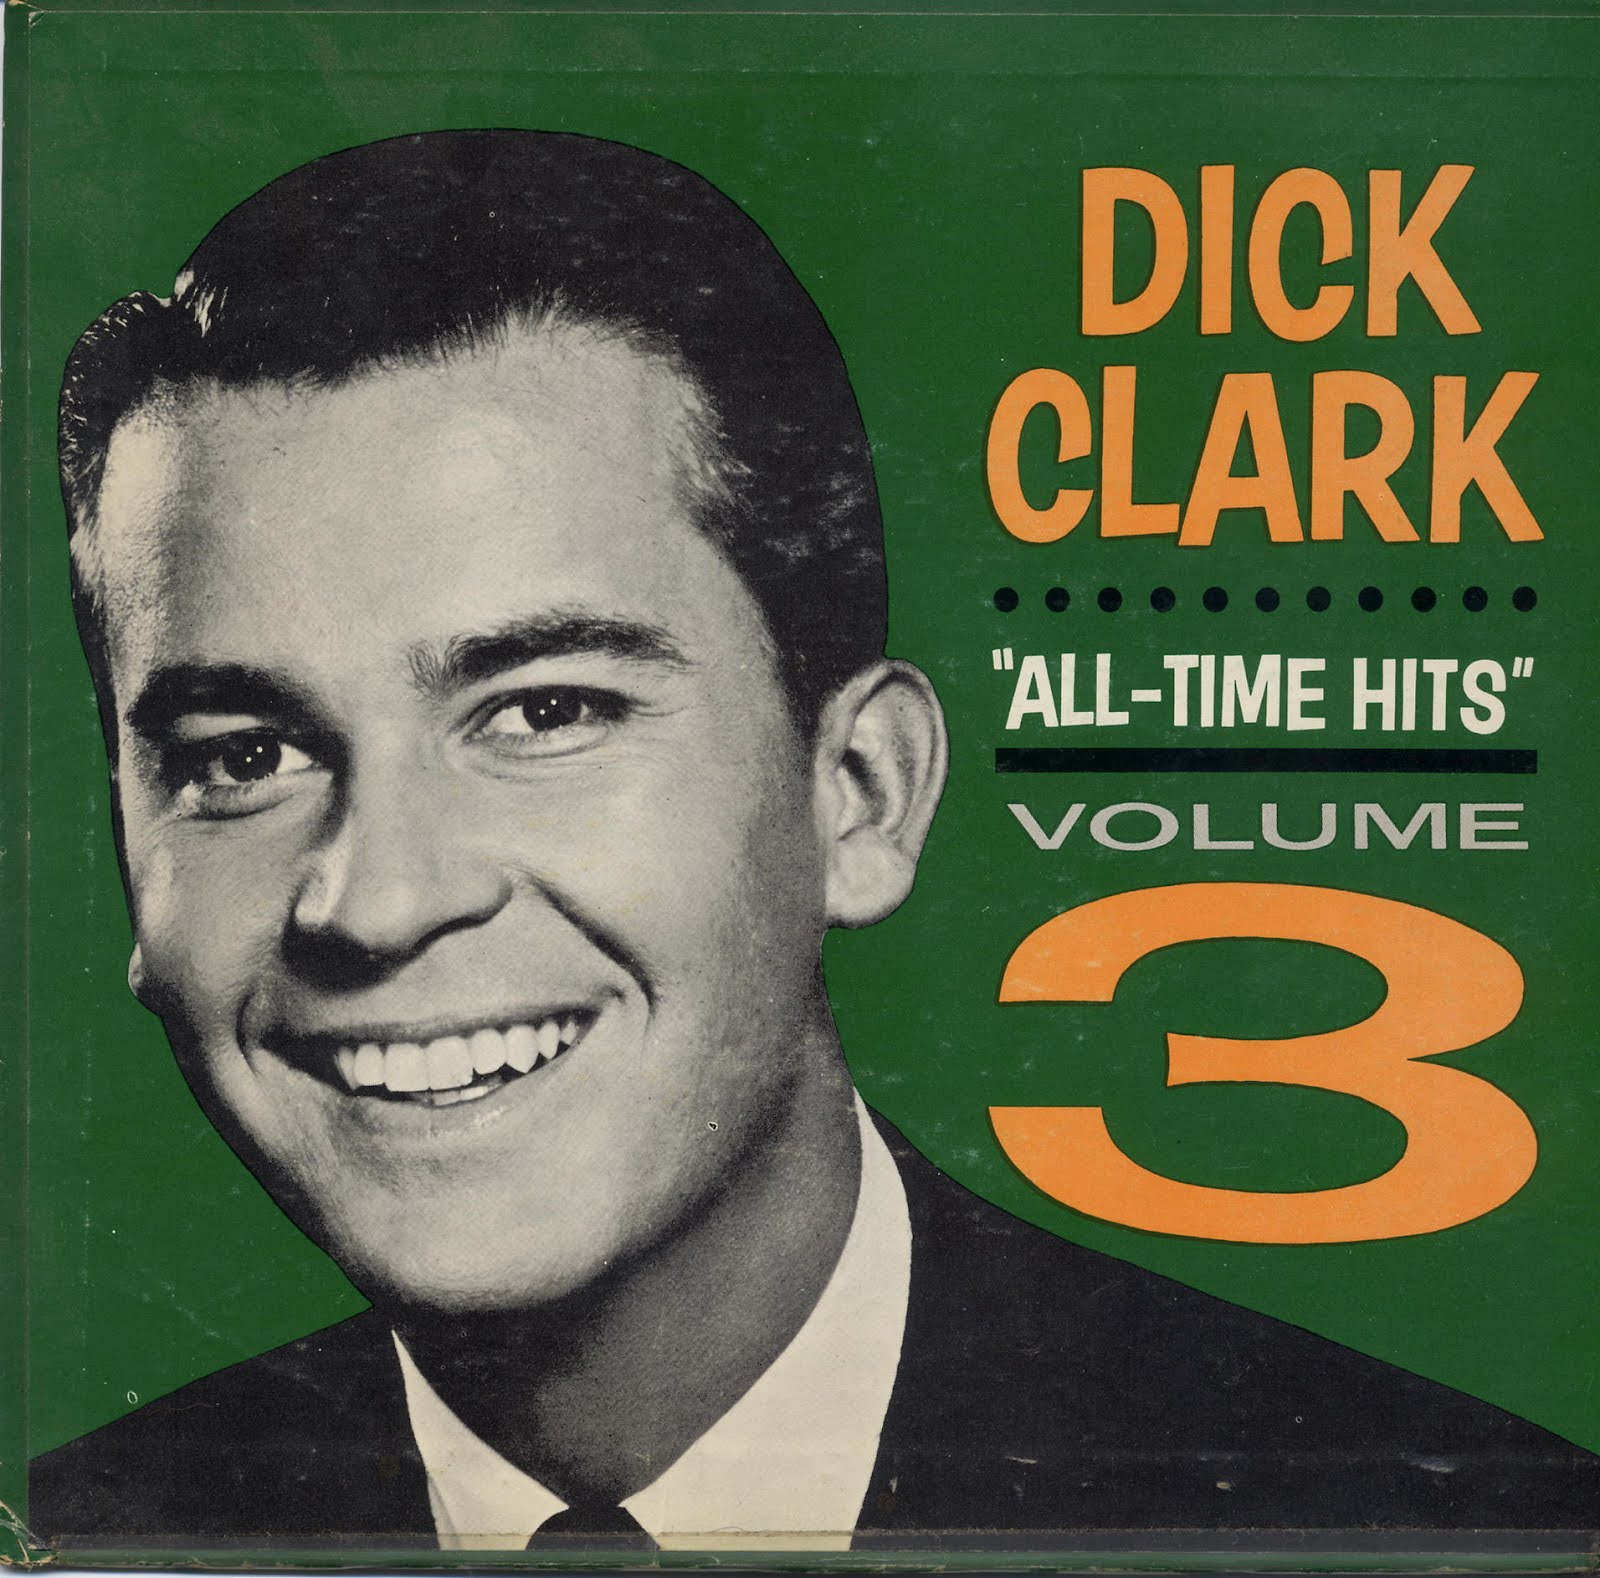 Dick clarks drive-in